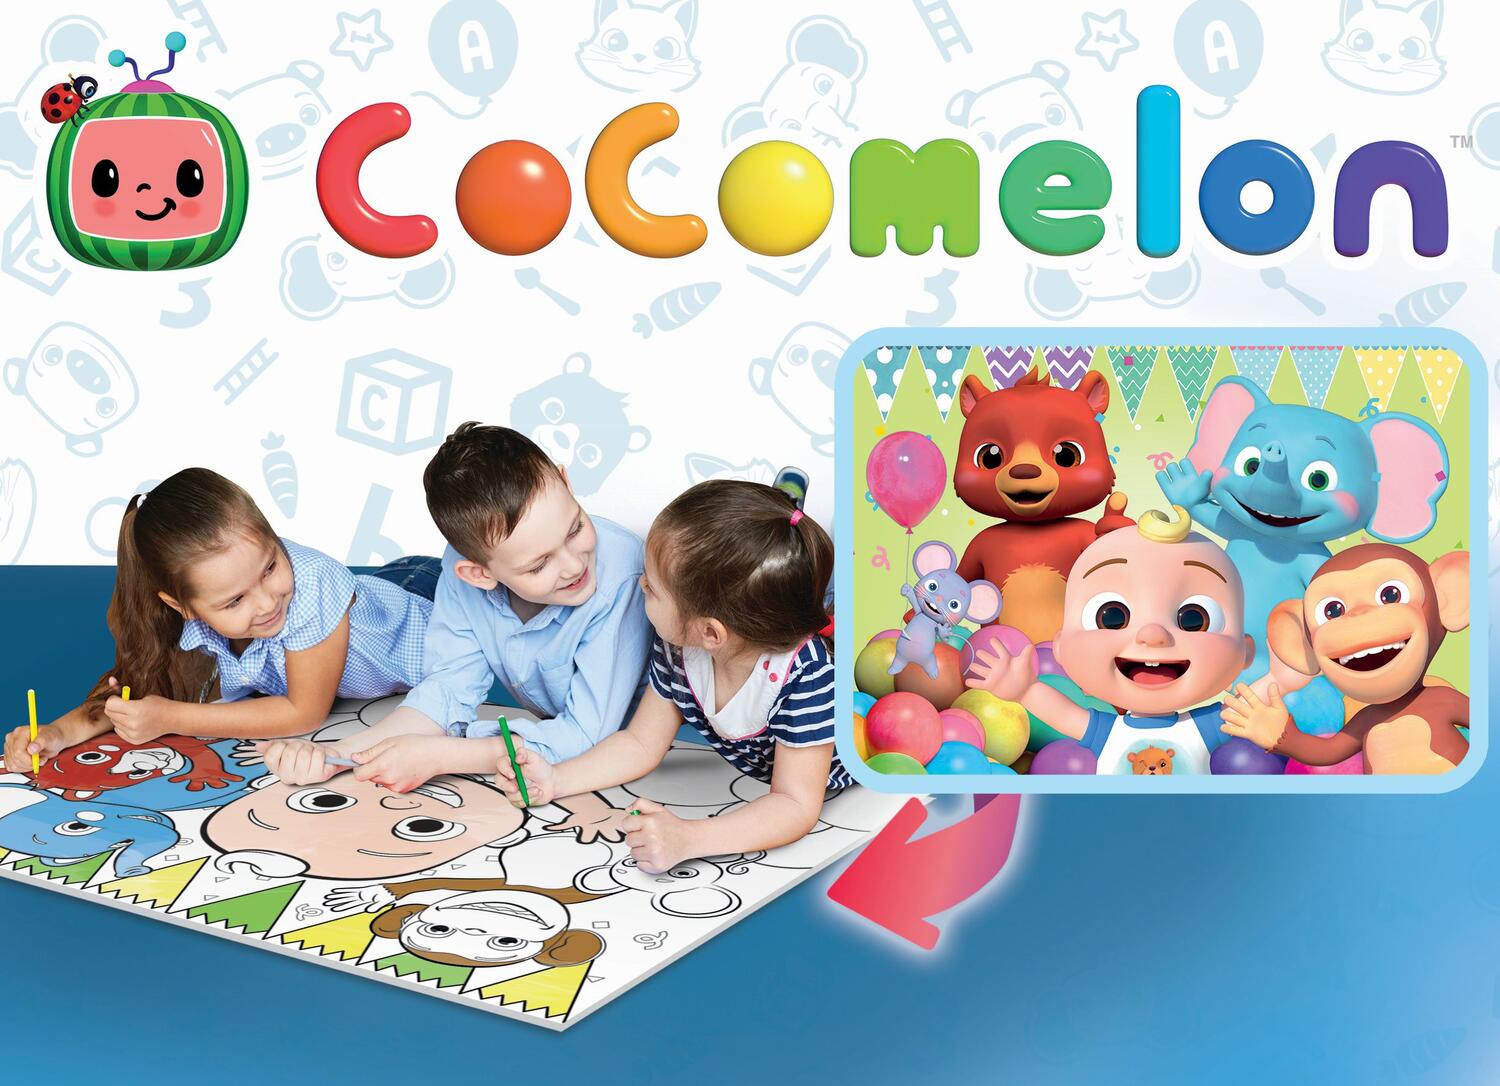 Puzzle de colorat maxi - Cocomelon si prietenii (24 piese) PlayLearn Toys